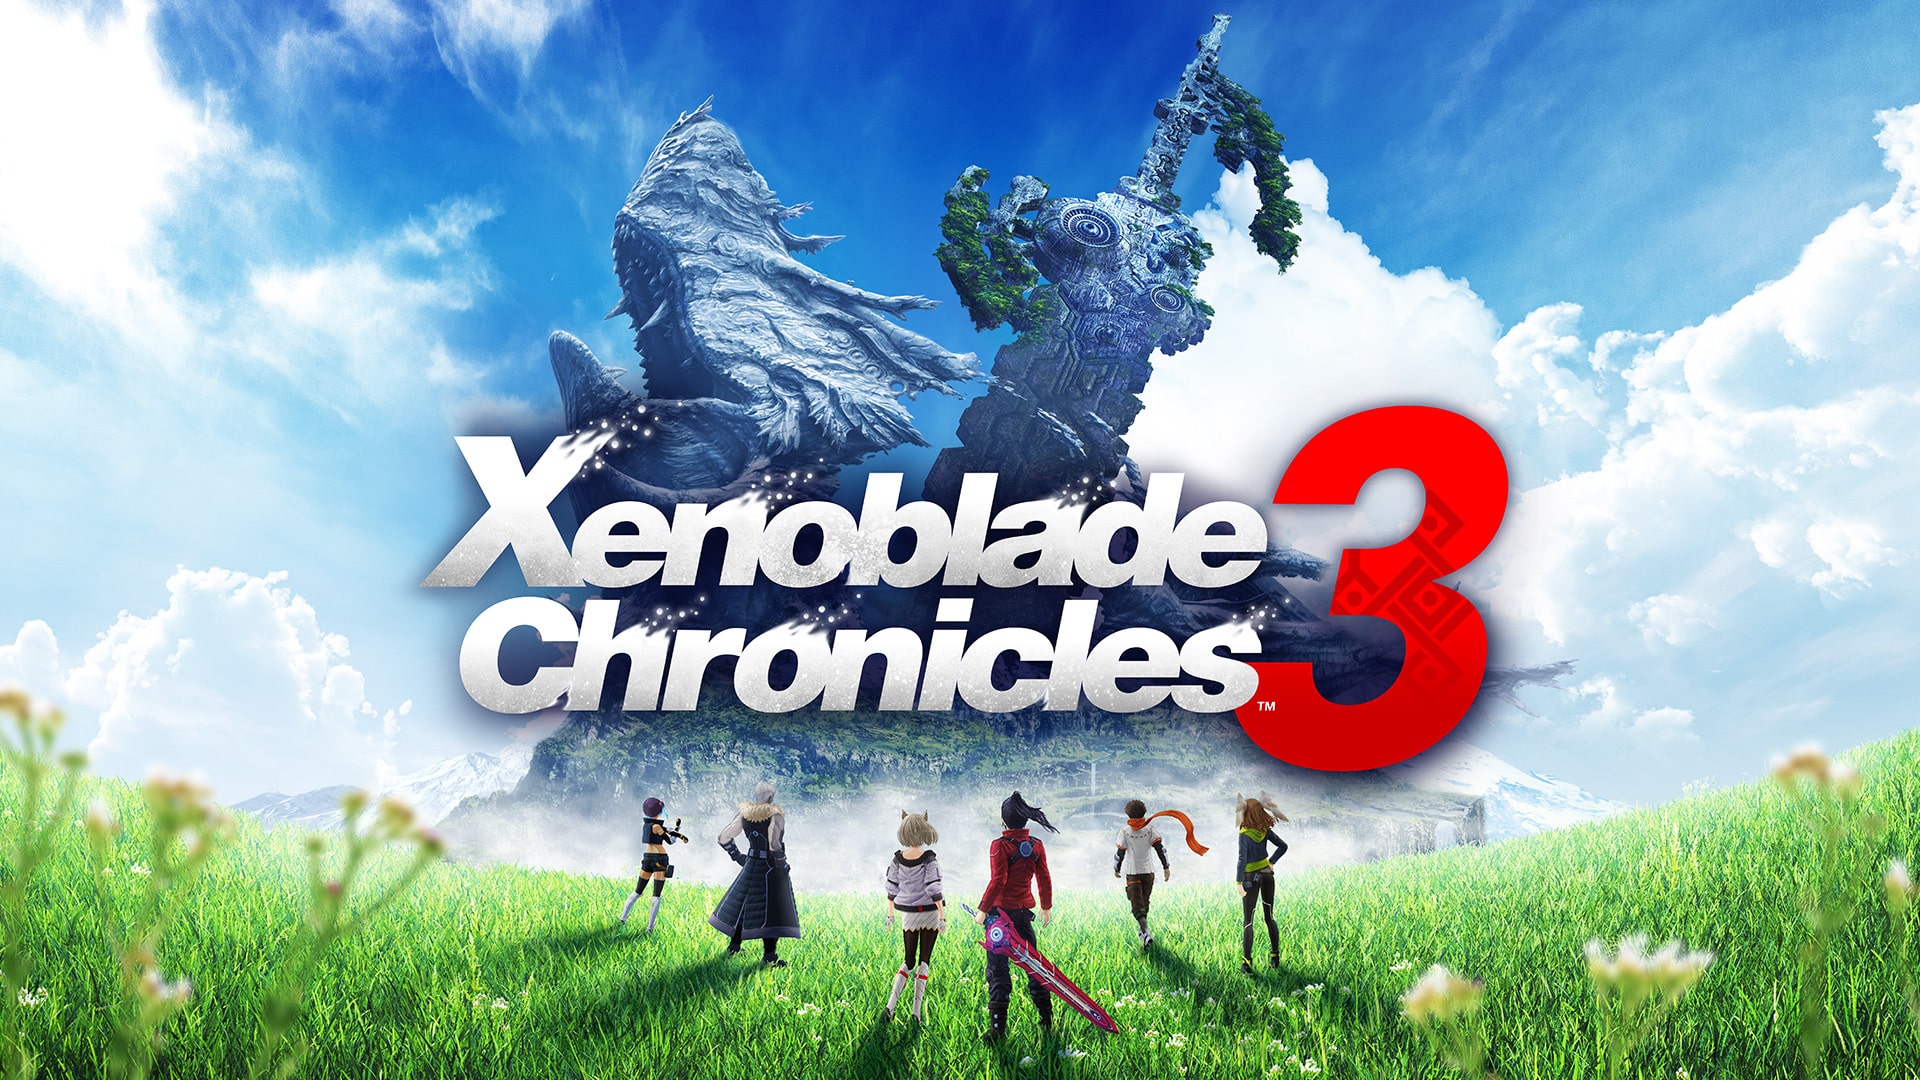 Xenoblade Chronicles 3 update 1.1.1